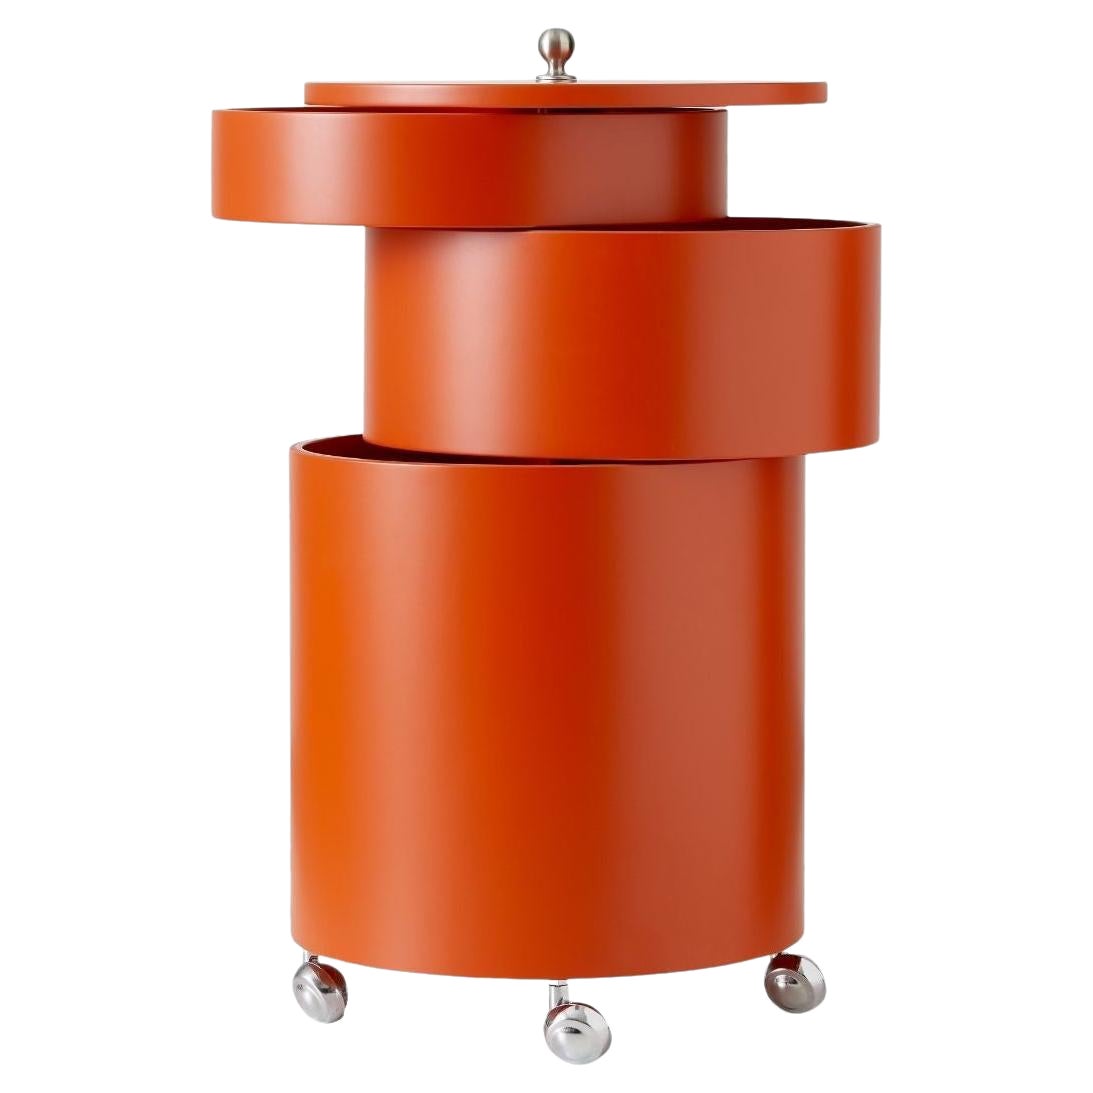 Verner Panton 'Barboy' Side Table and Storage Cabinet in Orange for Verpan